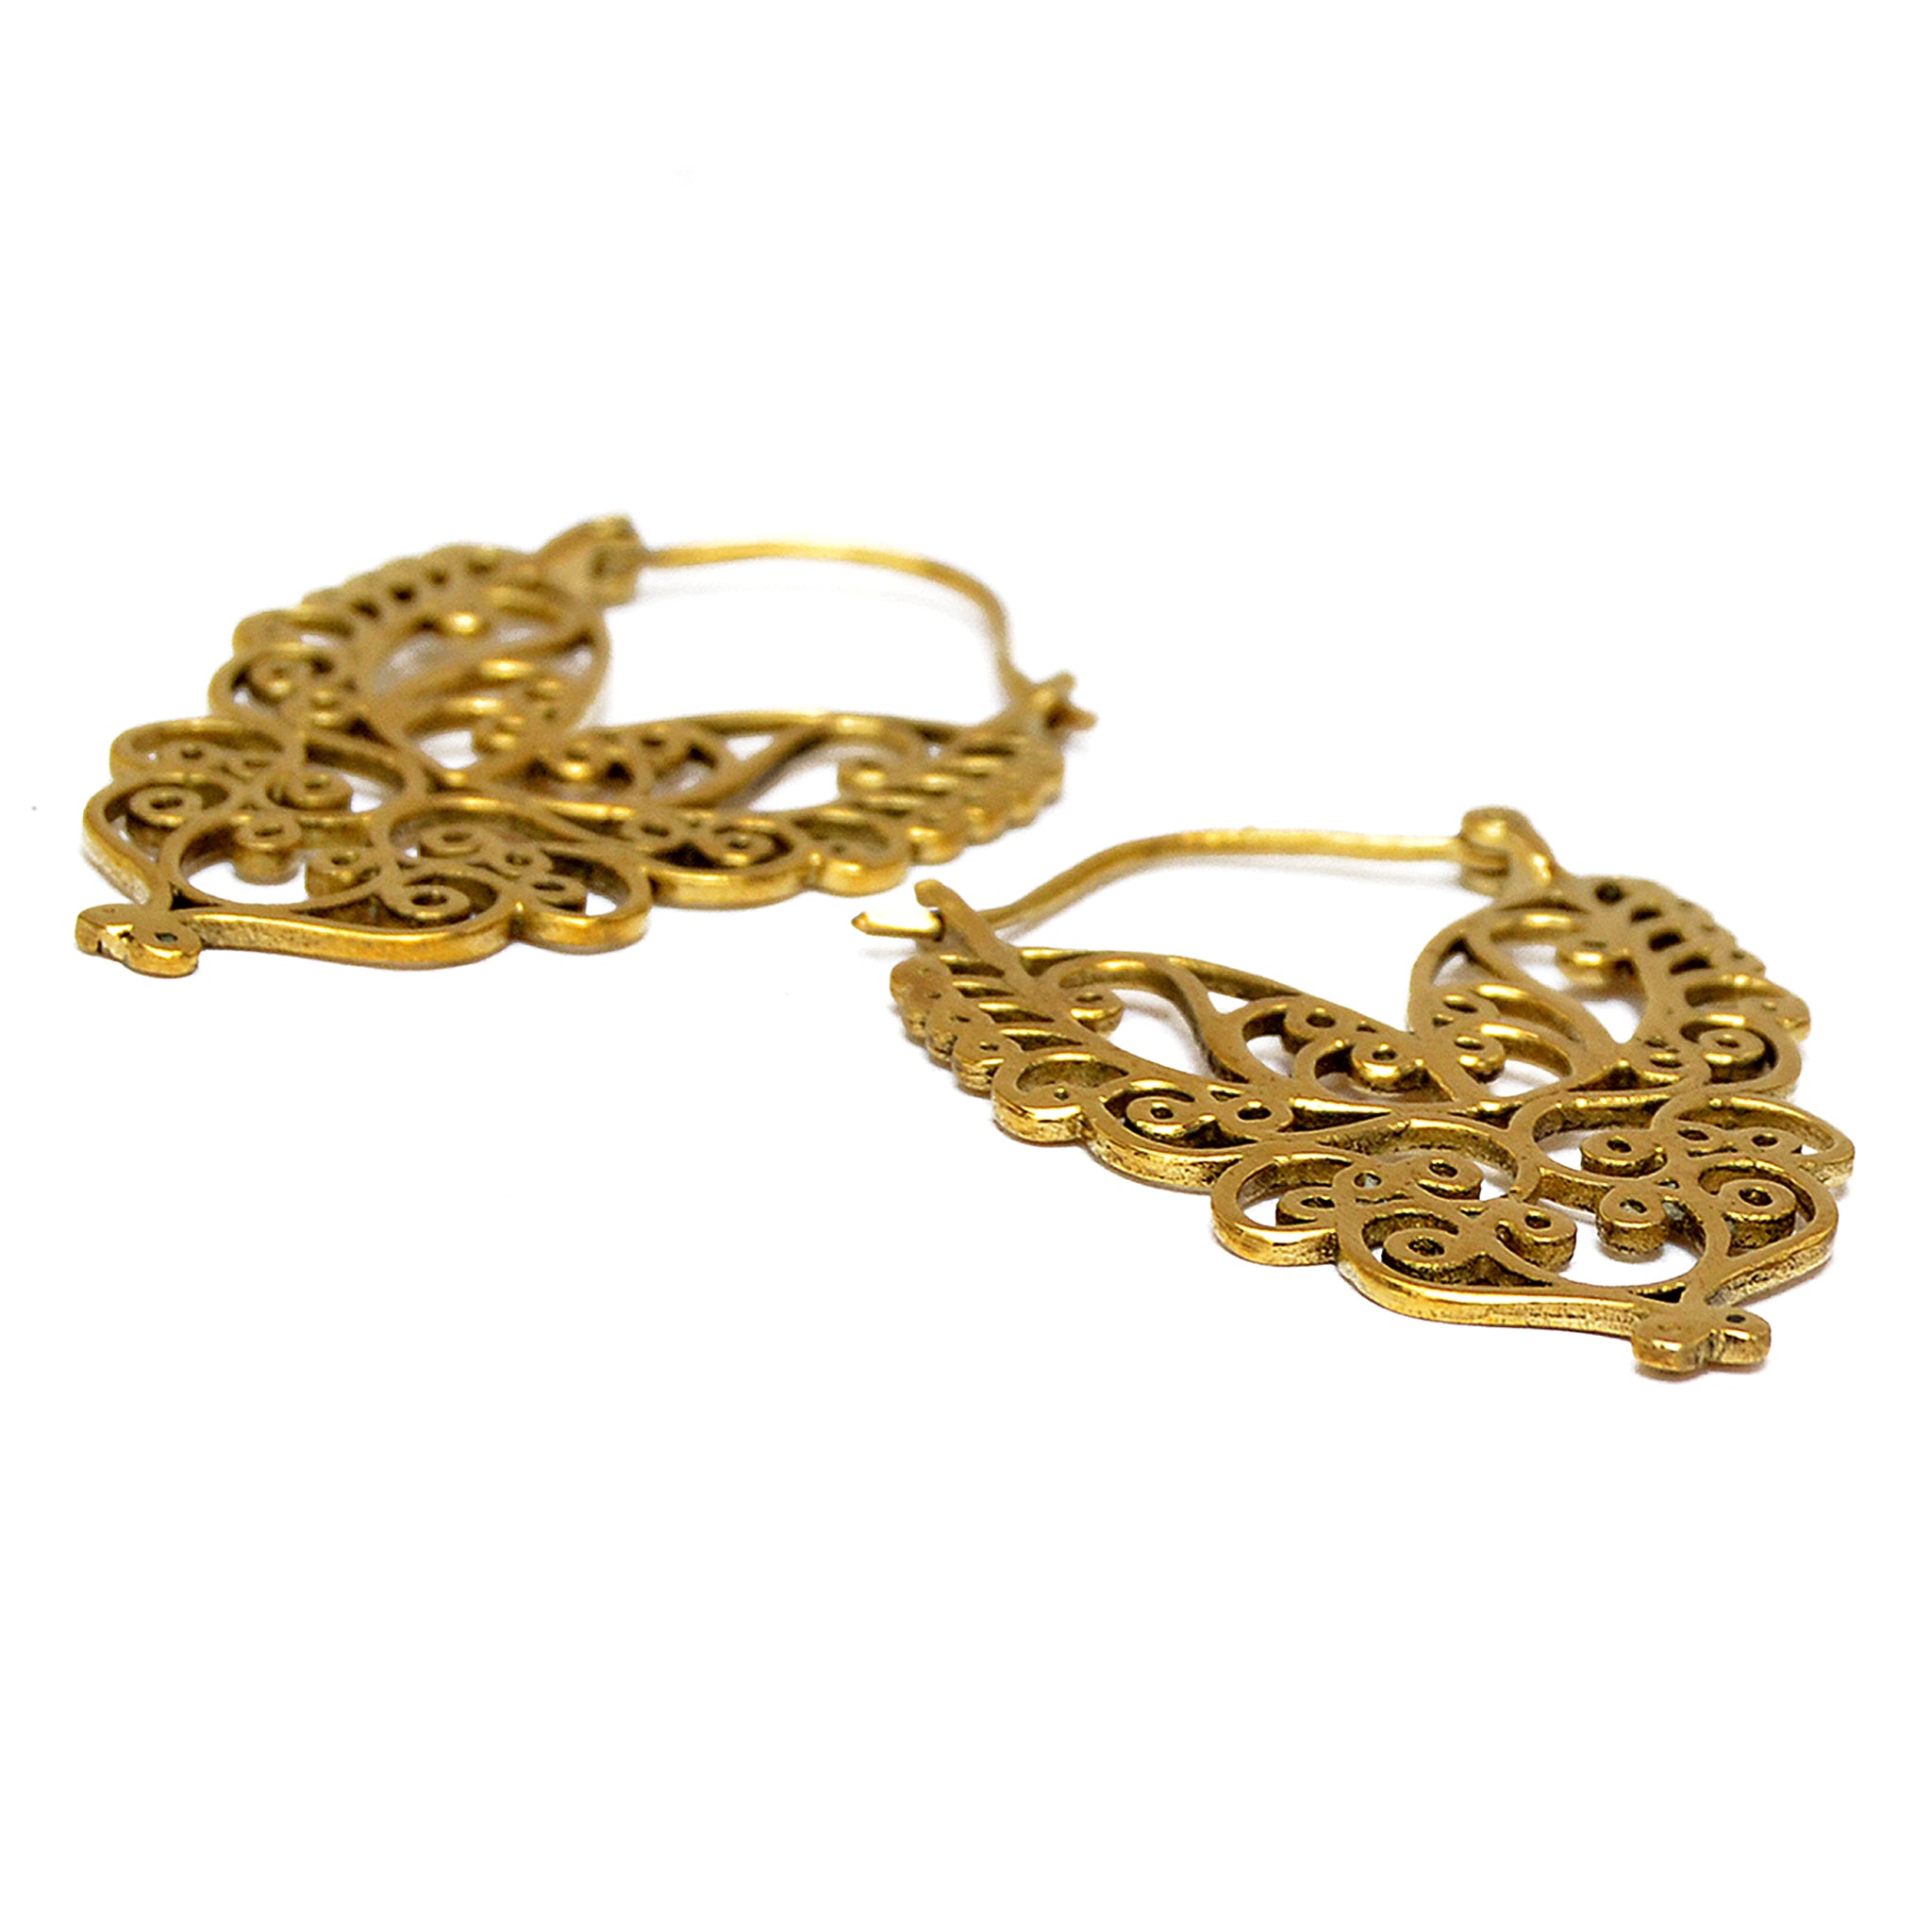 Tribal gold earrings